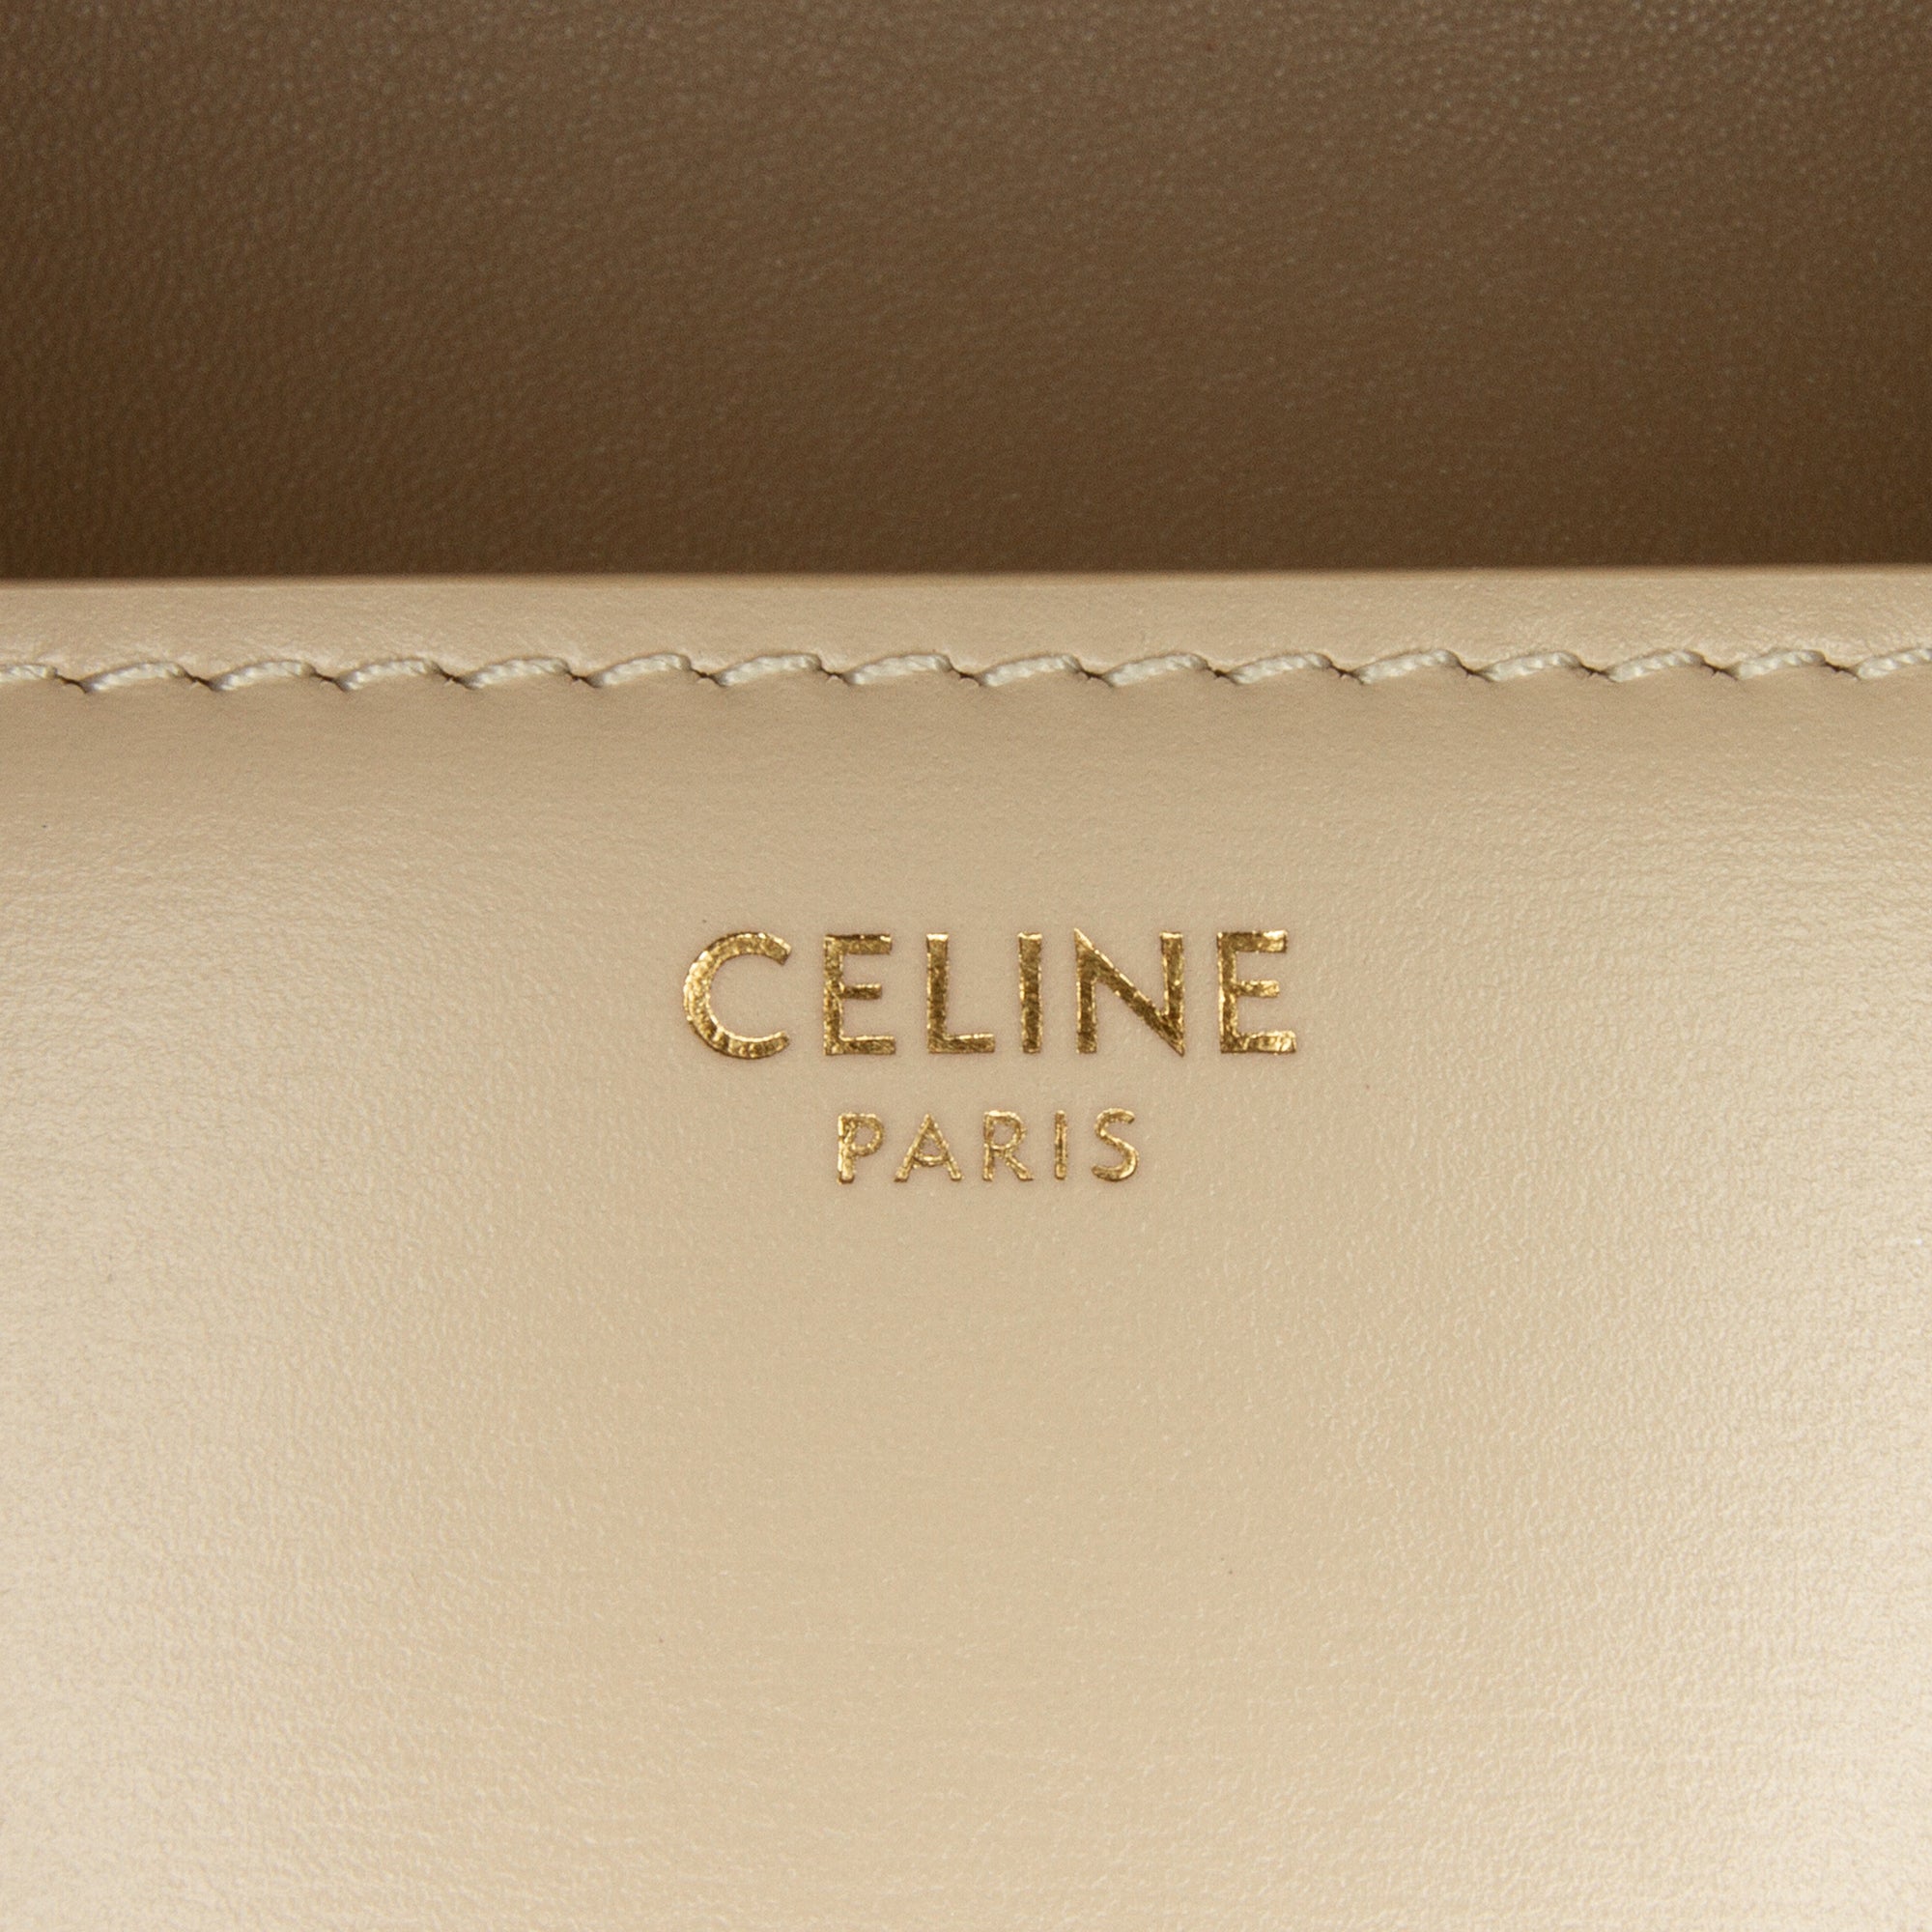 Celine Triomphe Crossbody Bag Large Brown